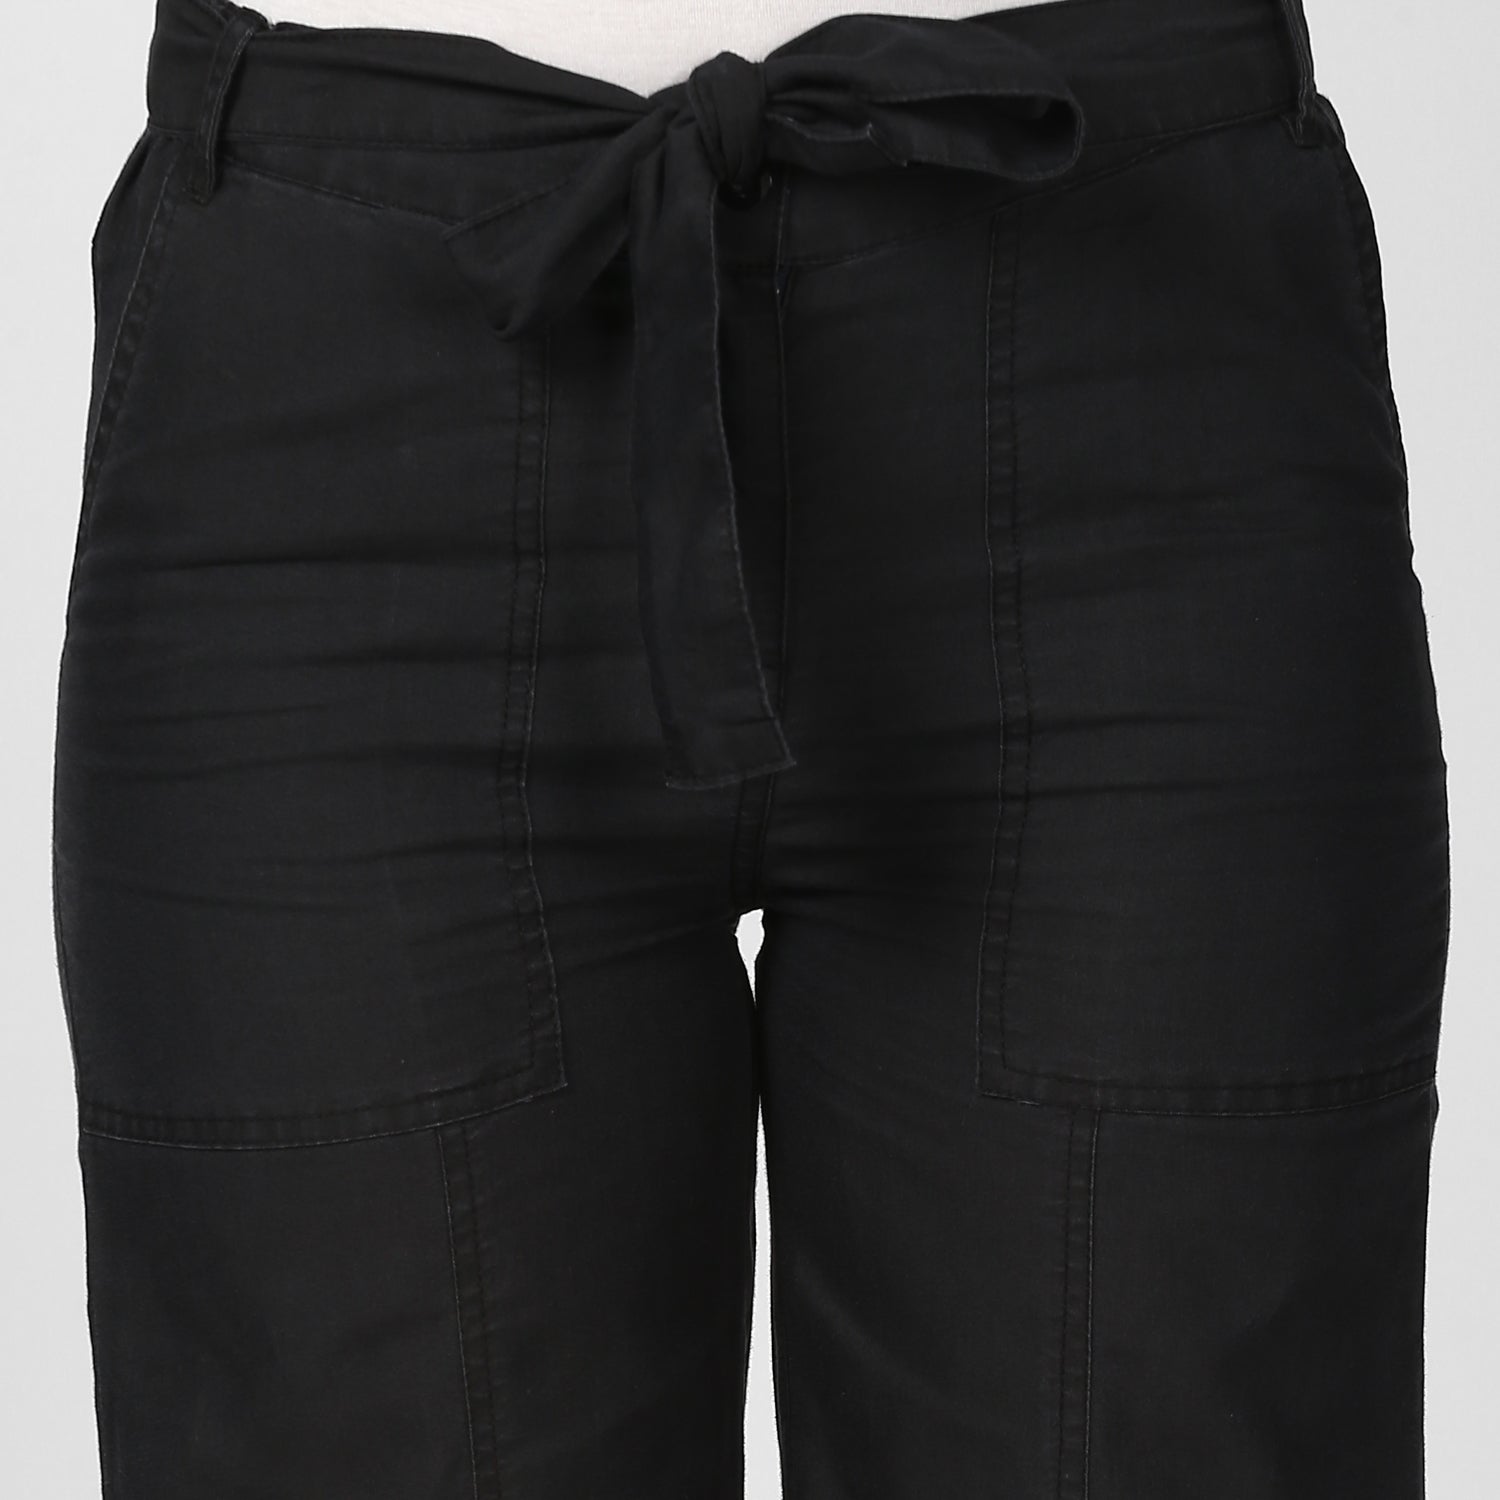 Women's Black Denim Trousers with belt - StyleStone